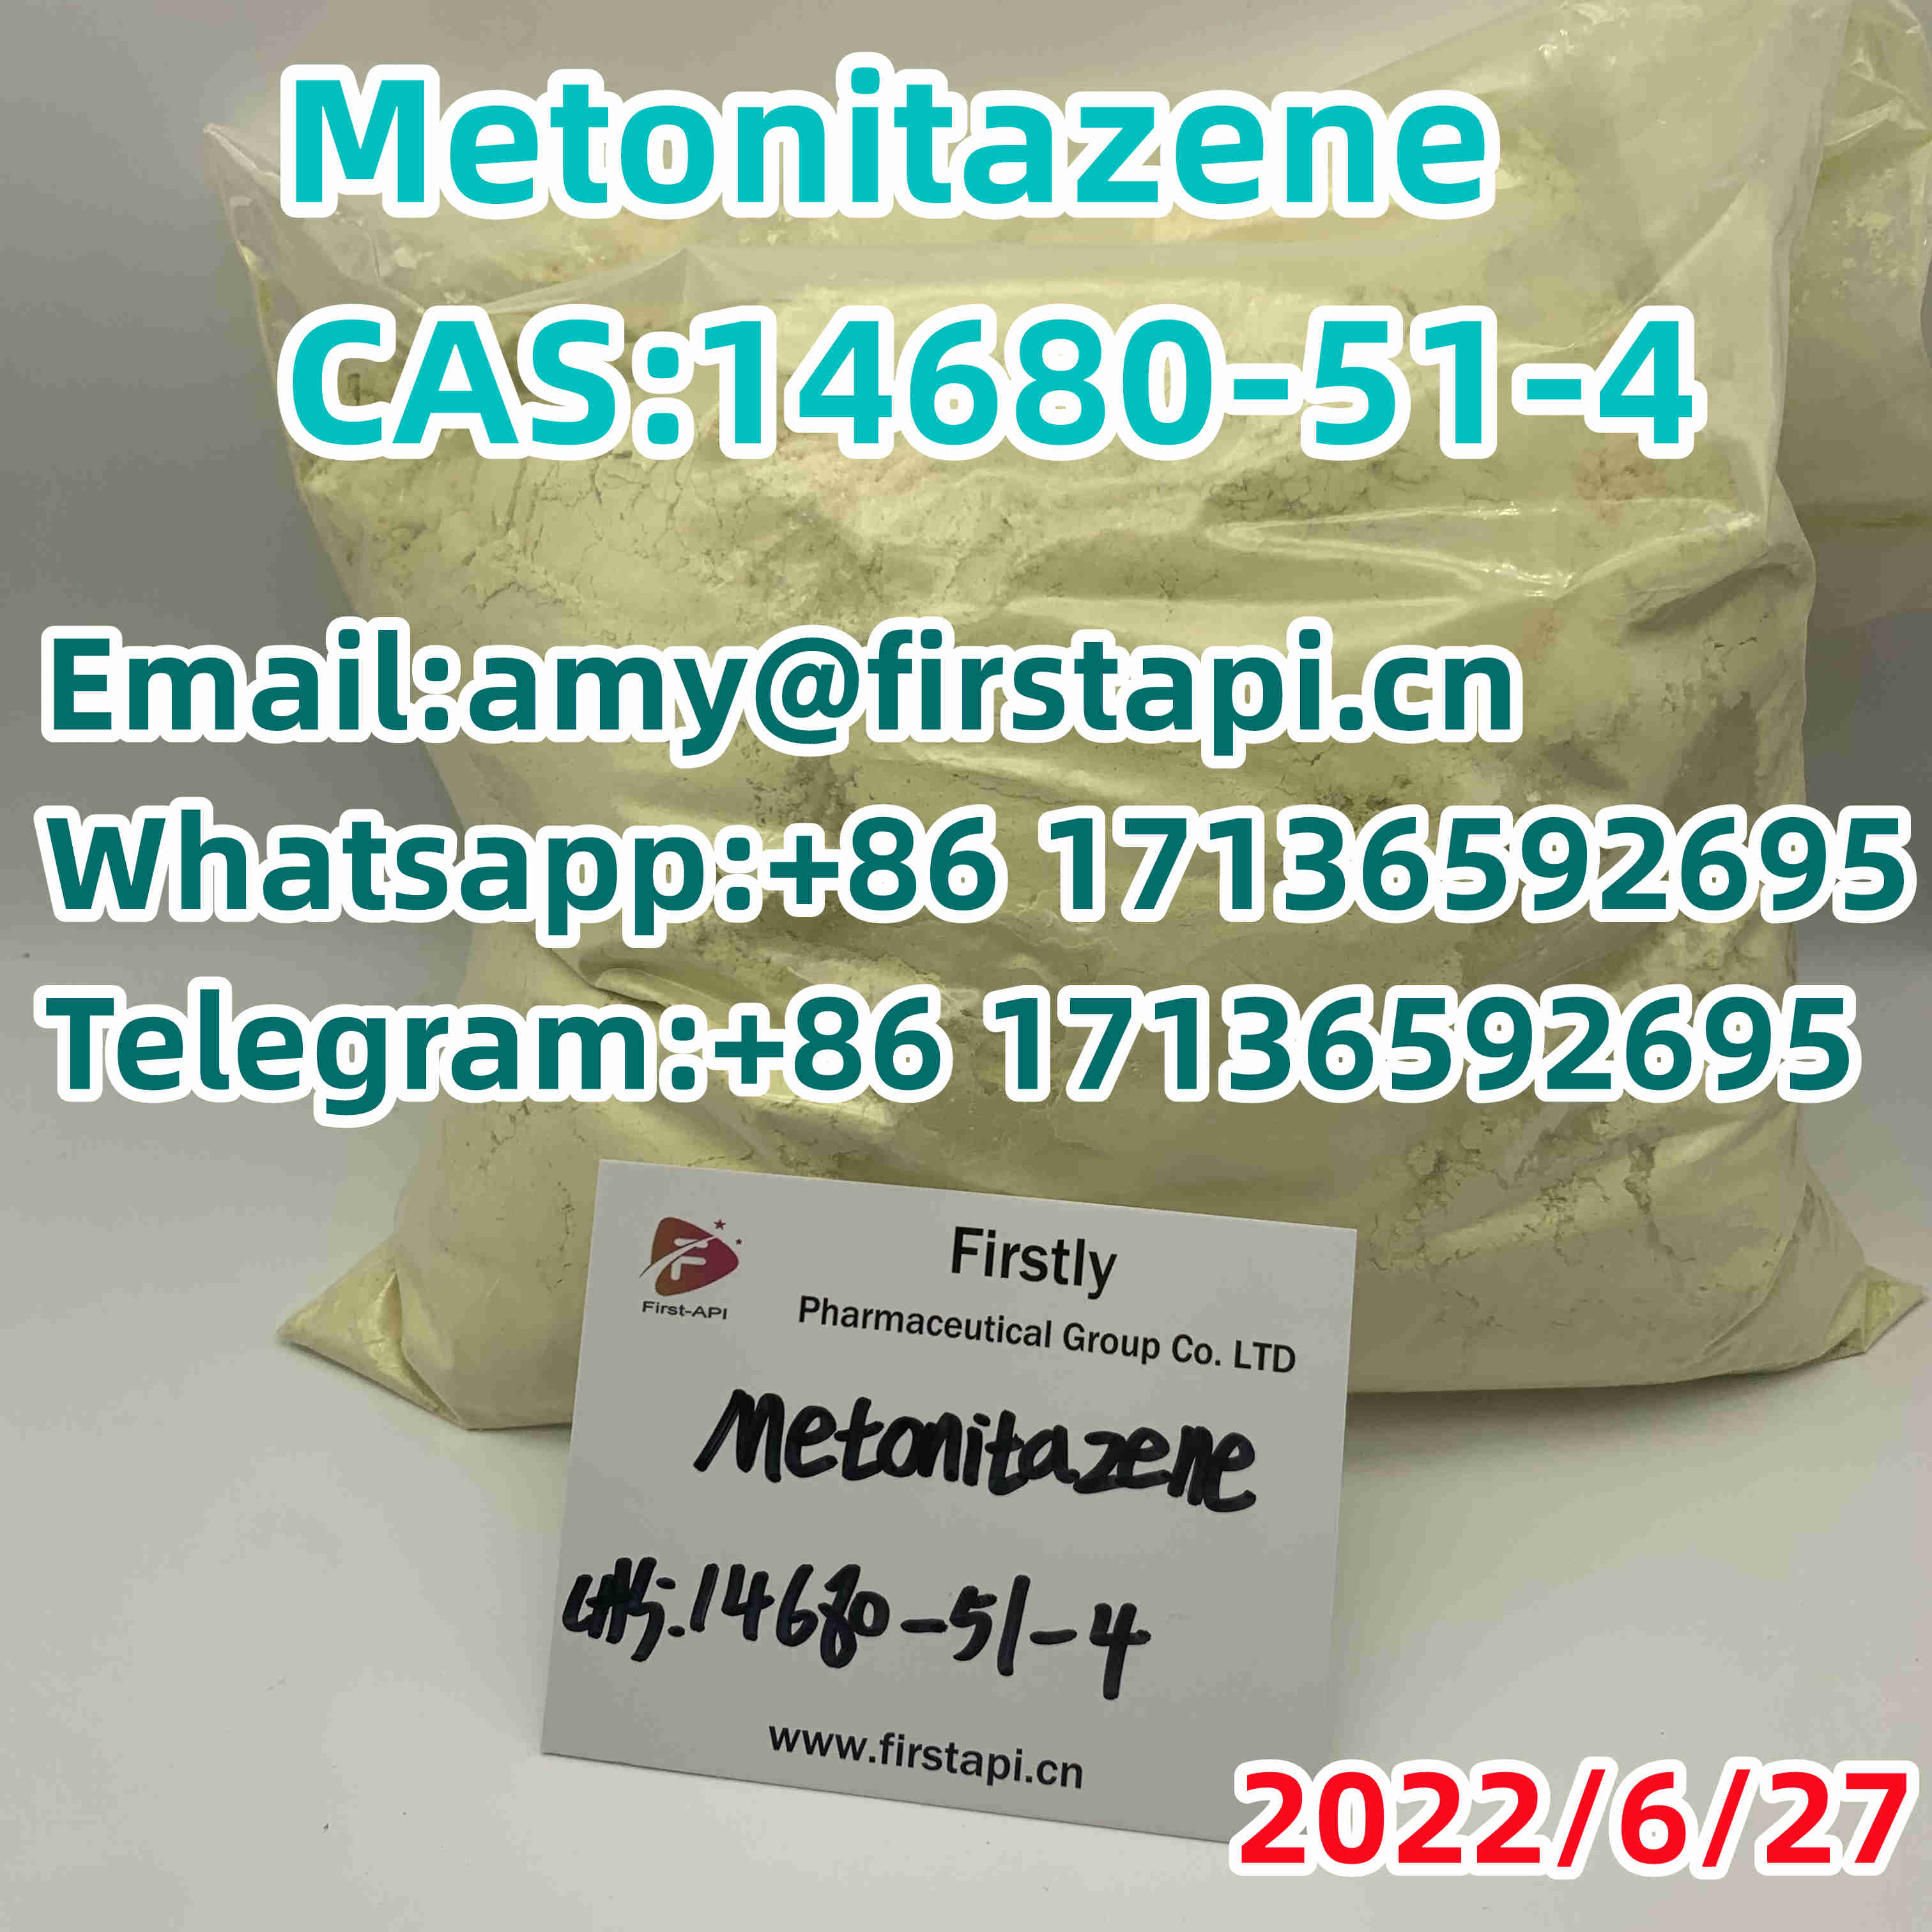 CAS No.:14680-51-4,Whatsapp:+86 17136592695,Chemical Name:Metonitazene, - photo